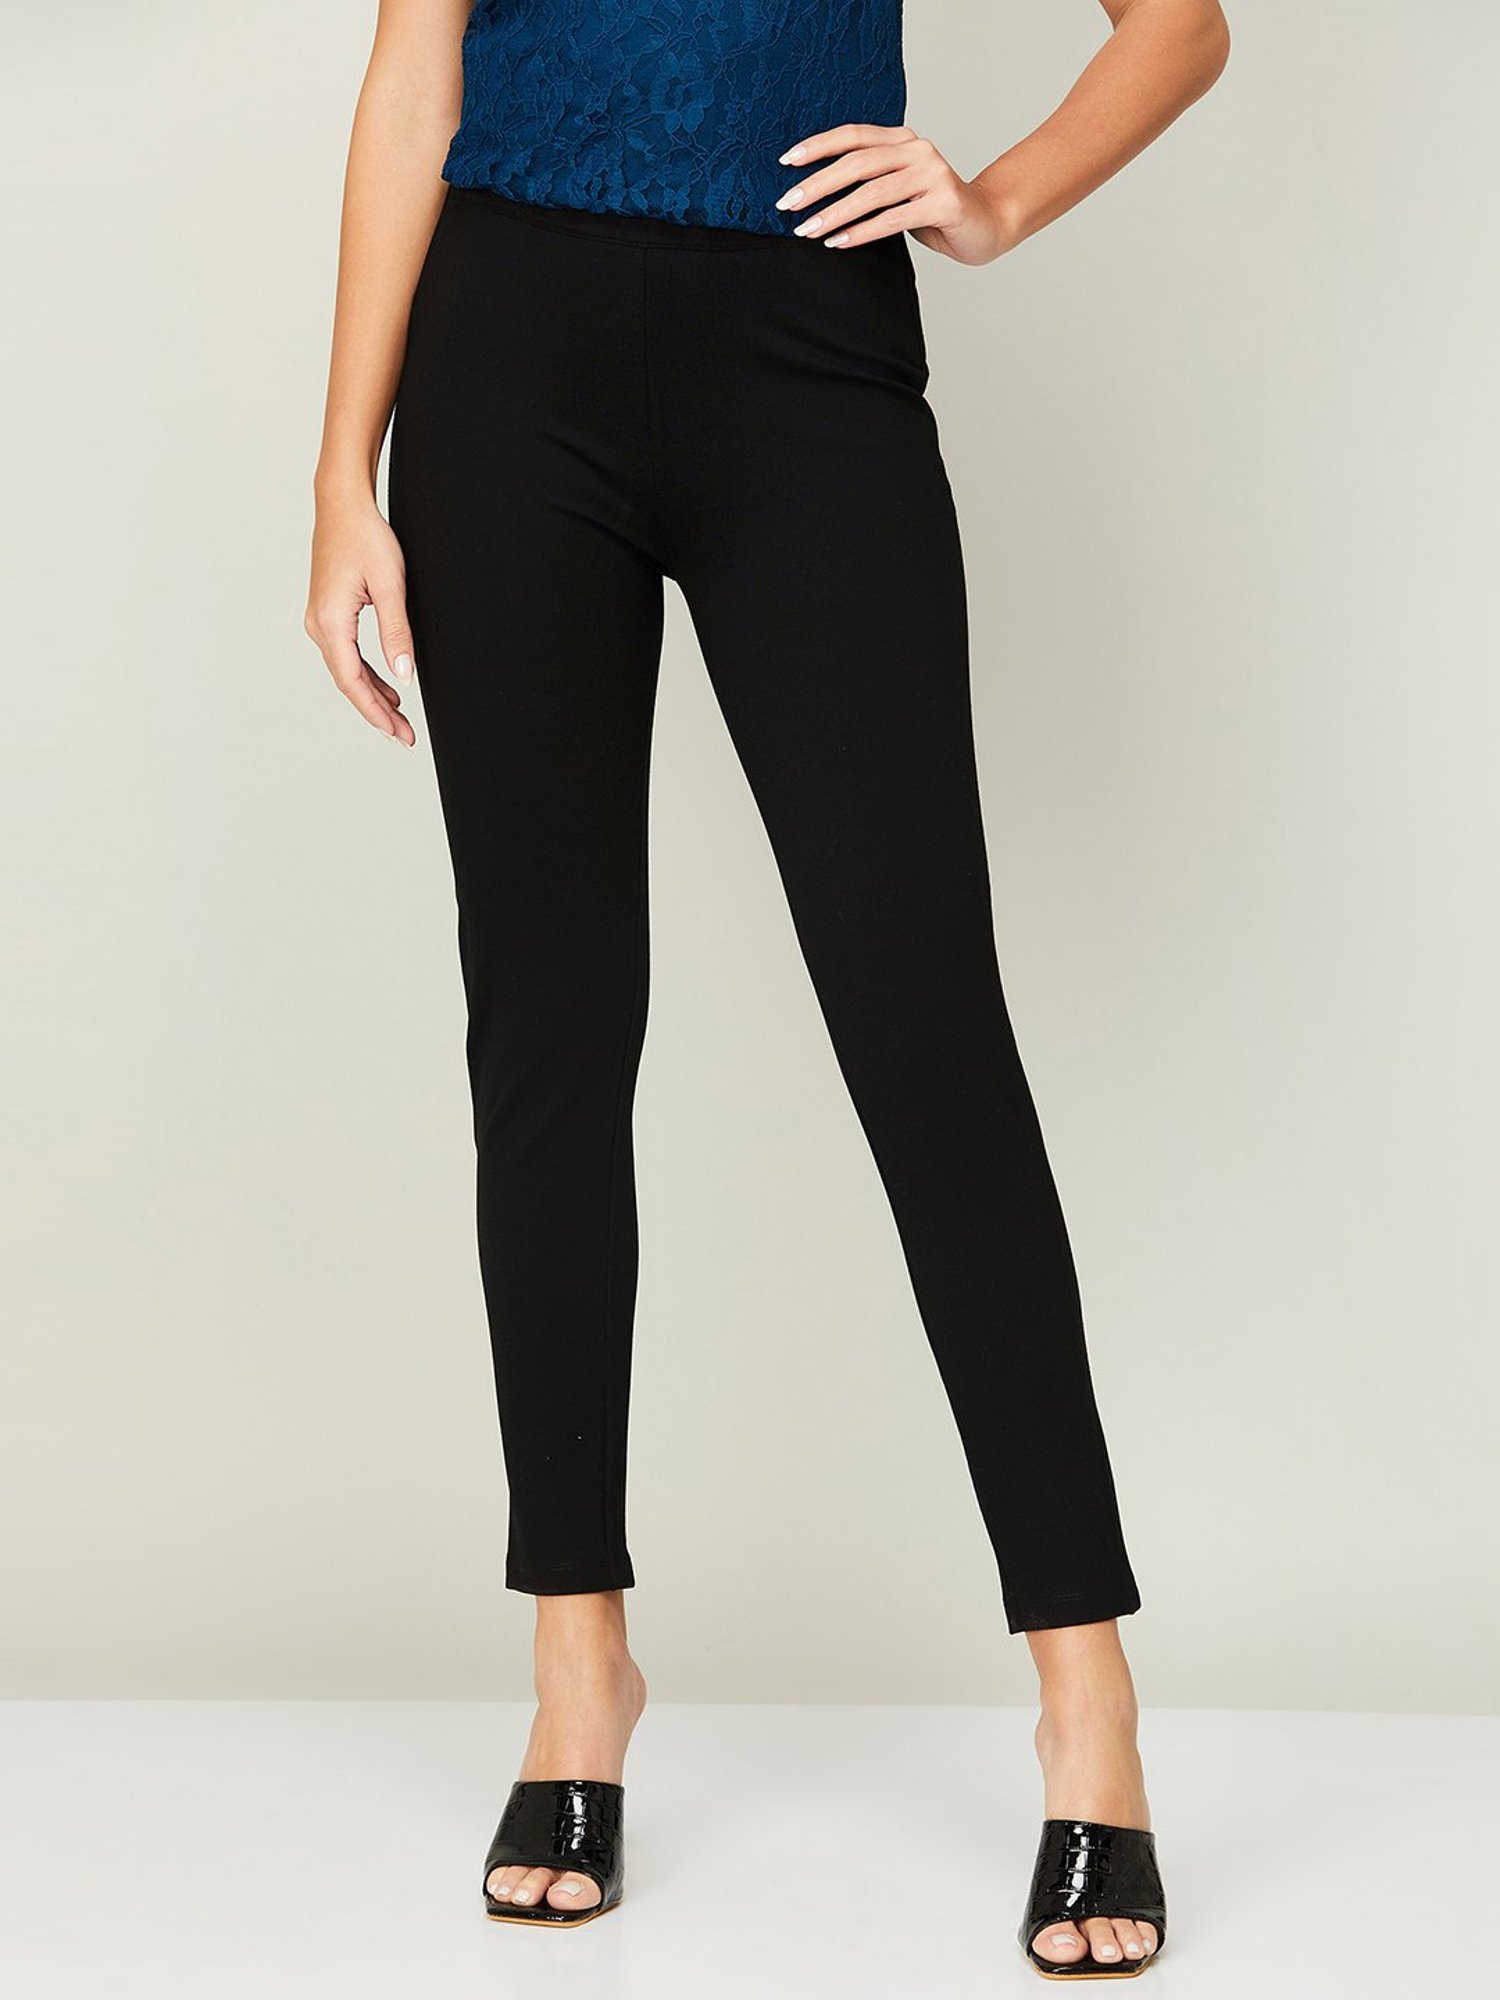 PU Leather Pants for Women High Waist Skinny Push Up Leggings Elastic  Trousers Plus Size - Walmart.com